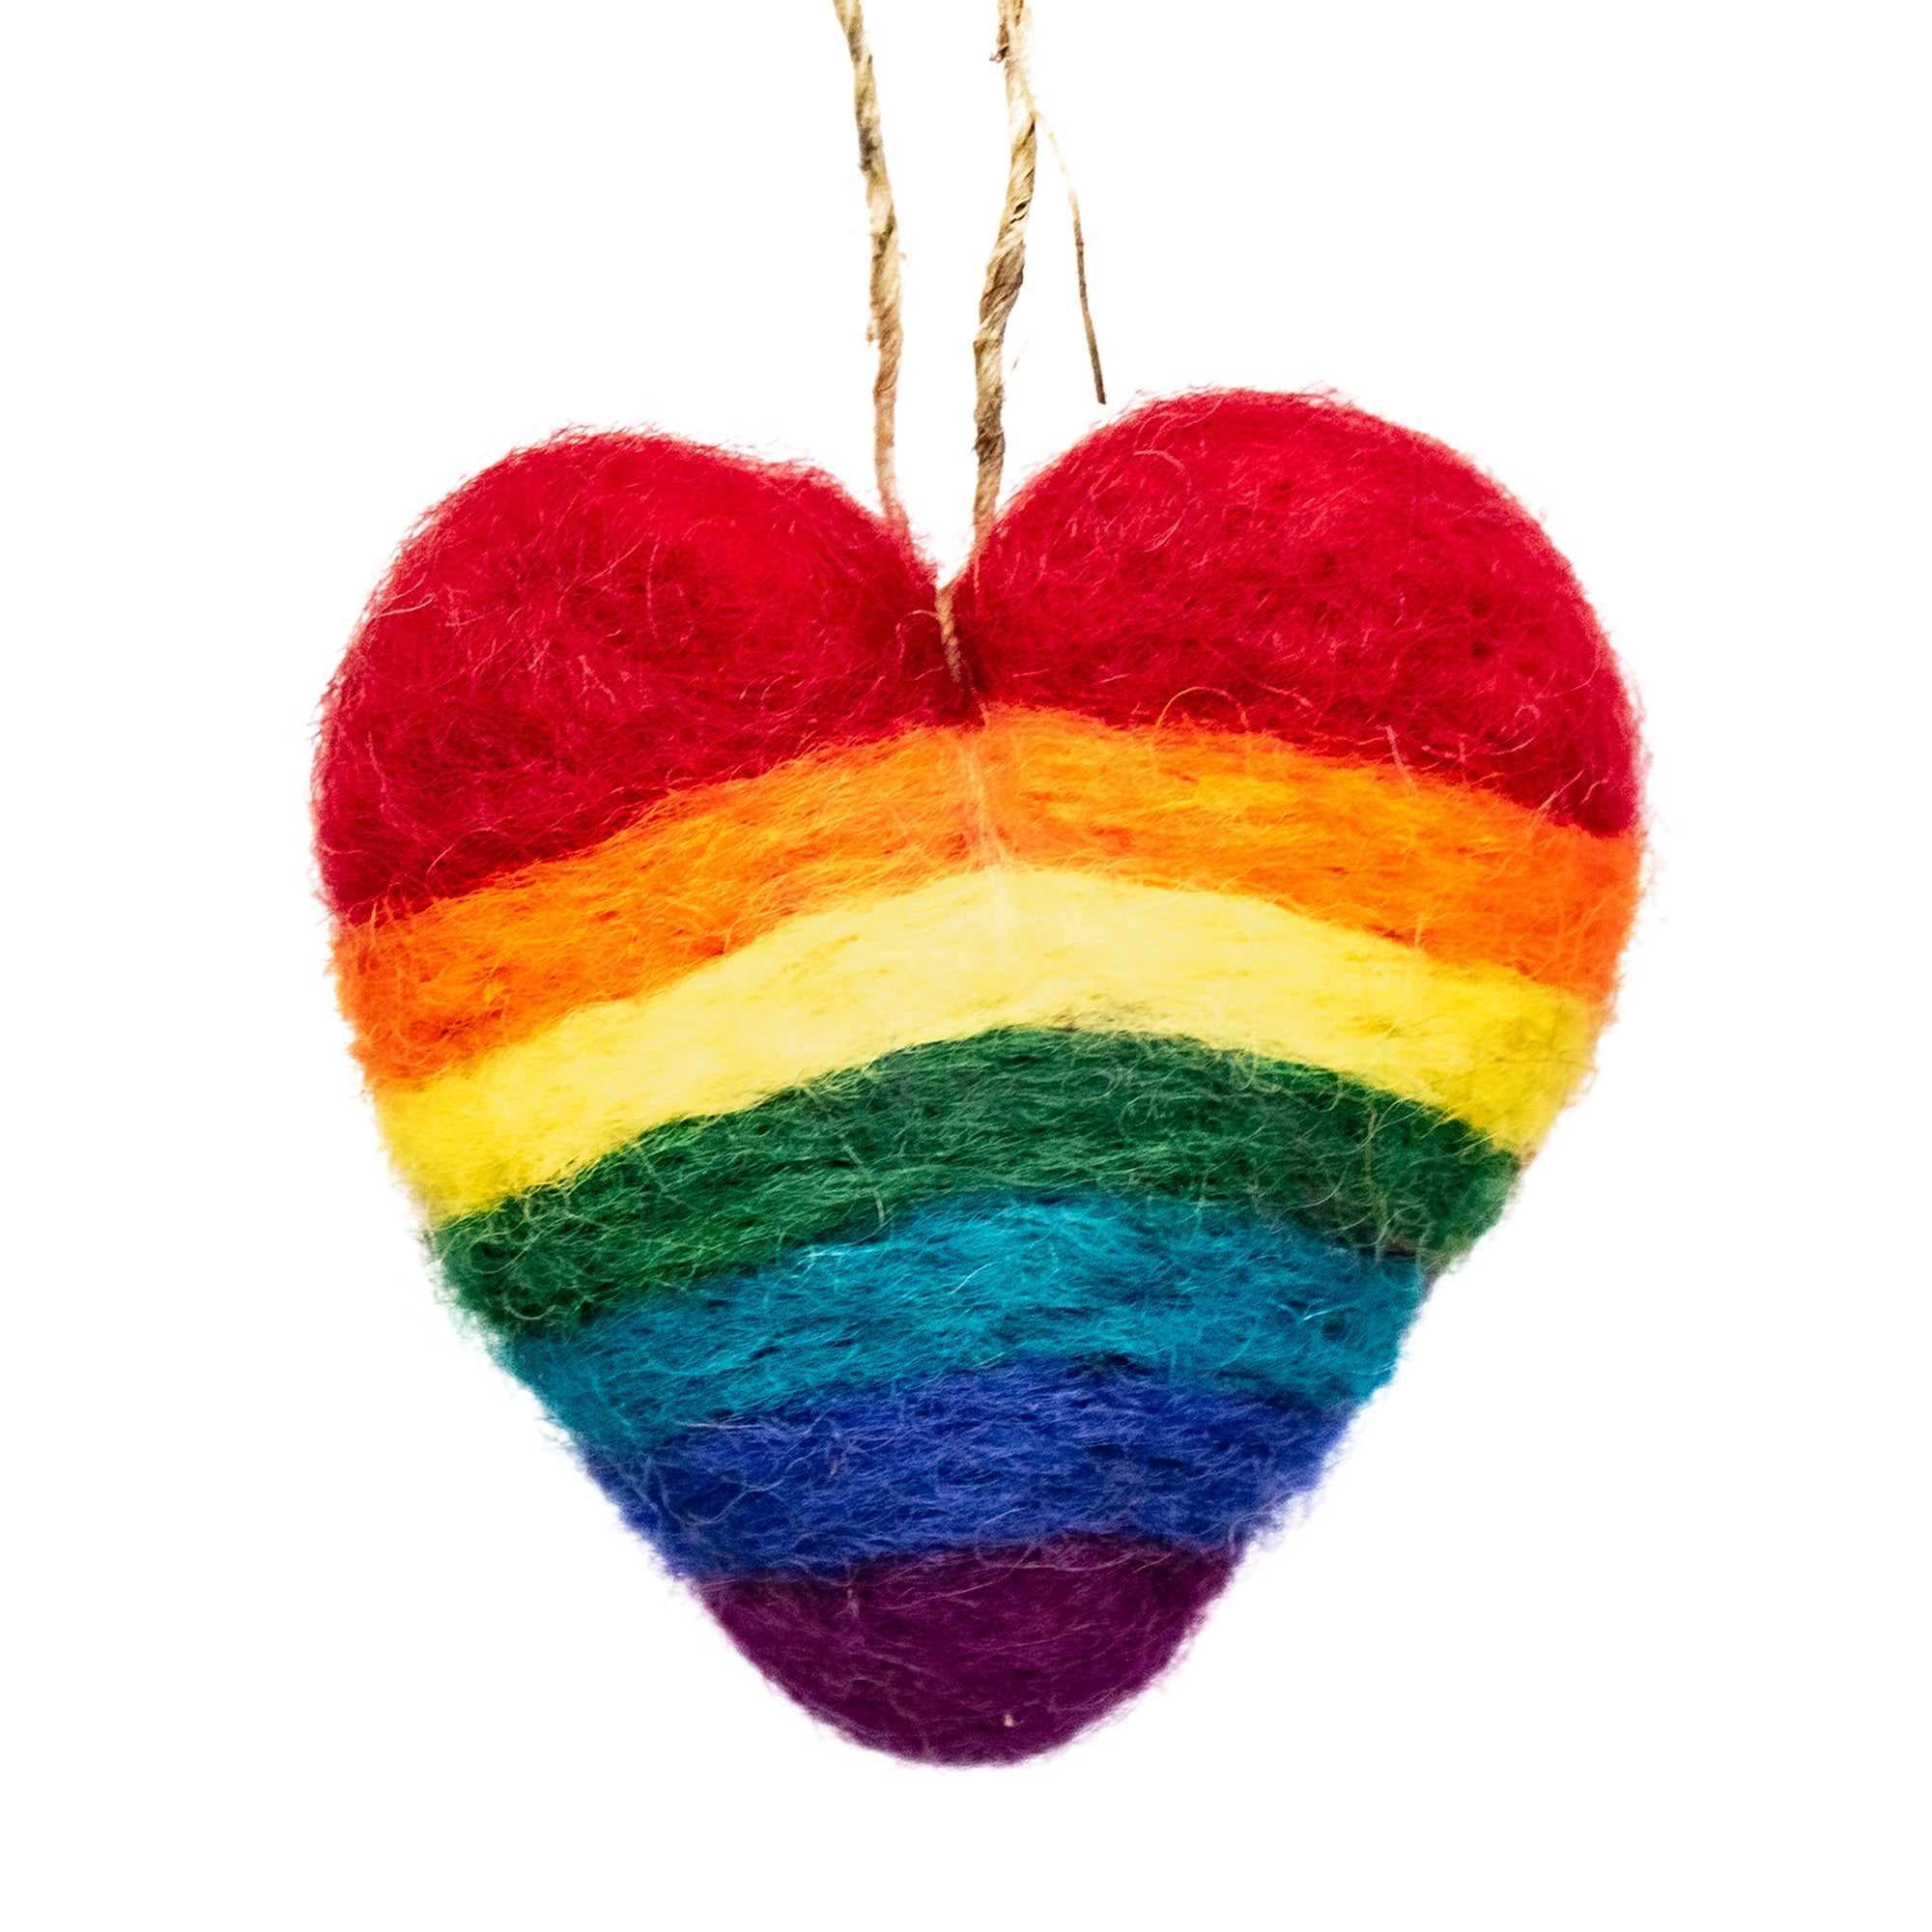 Rainbow Needle Felt Heart Handmade Felt Ornament